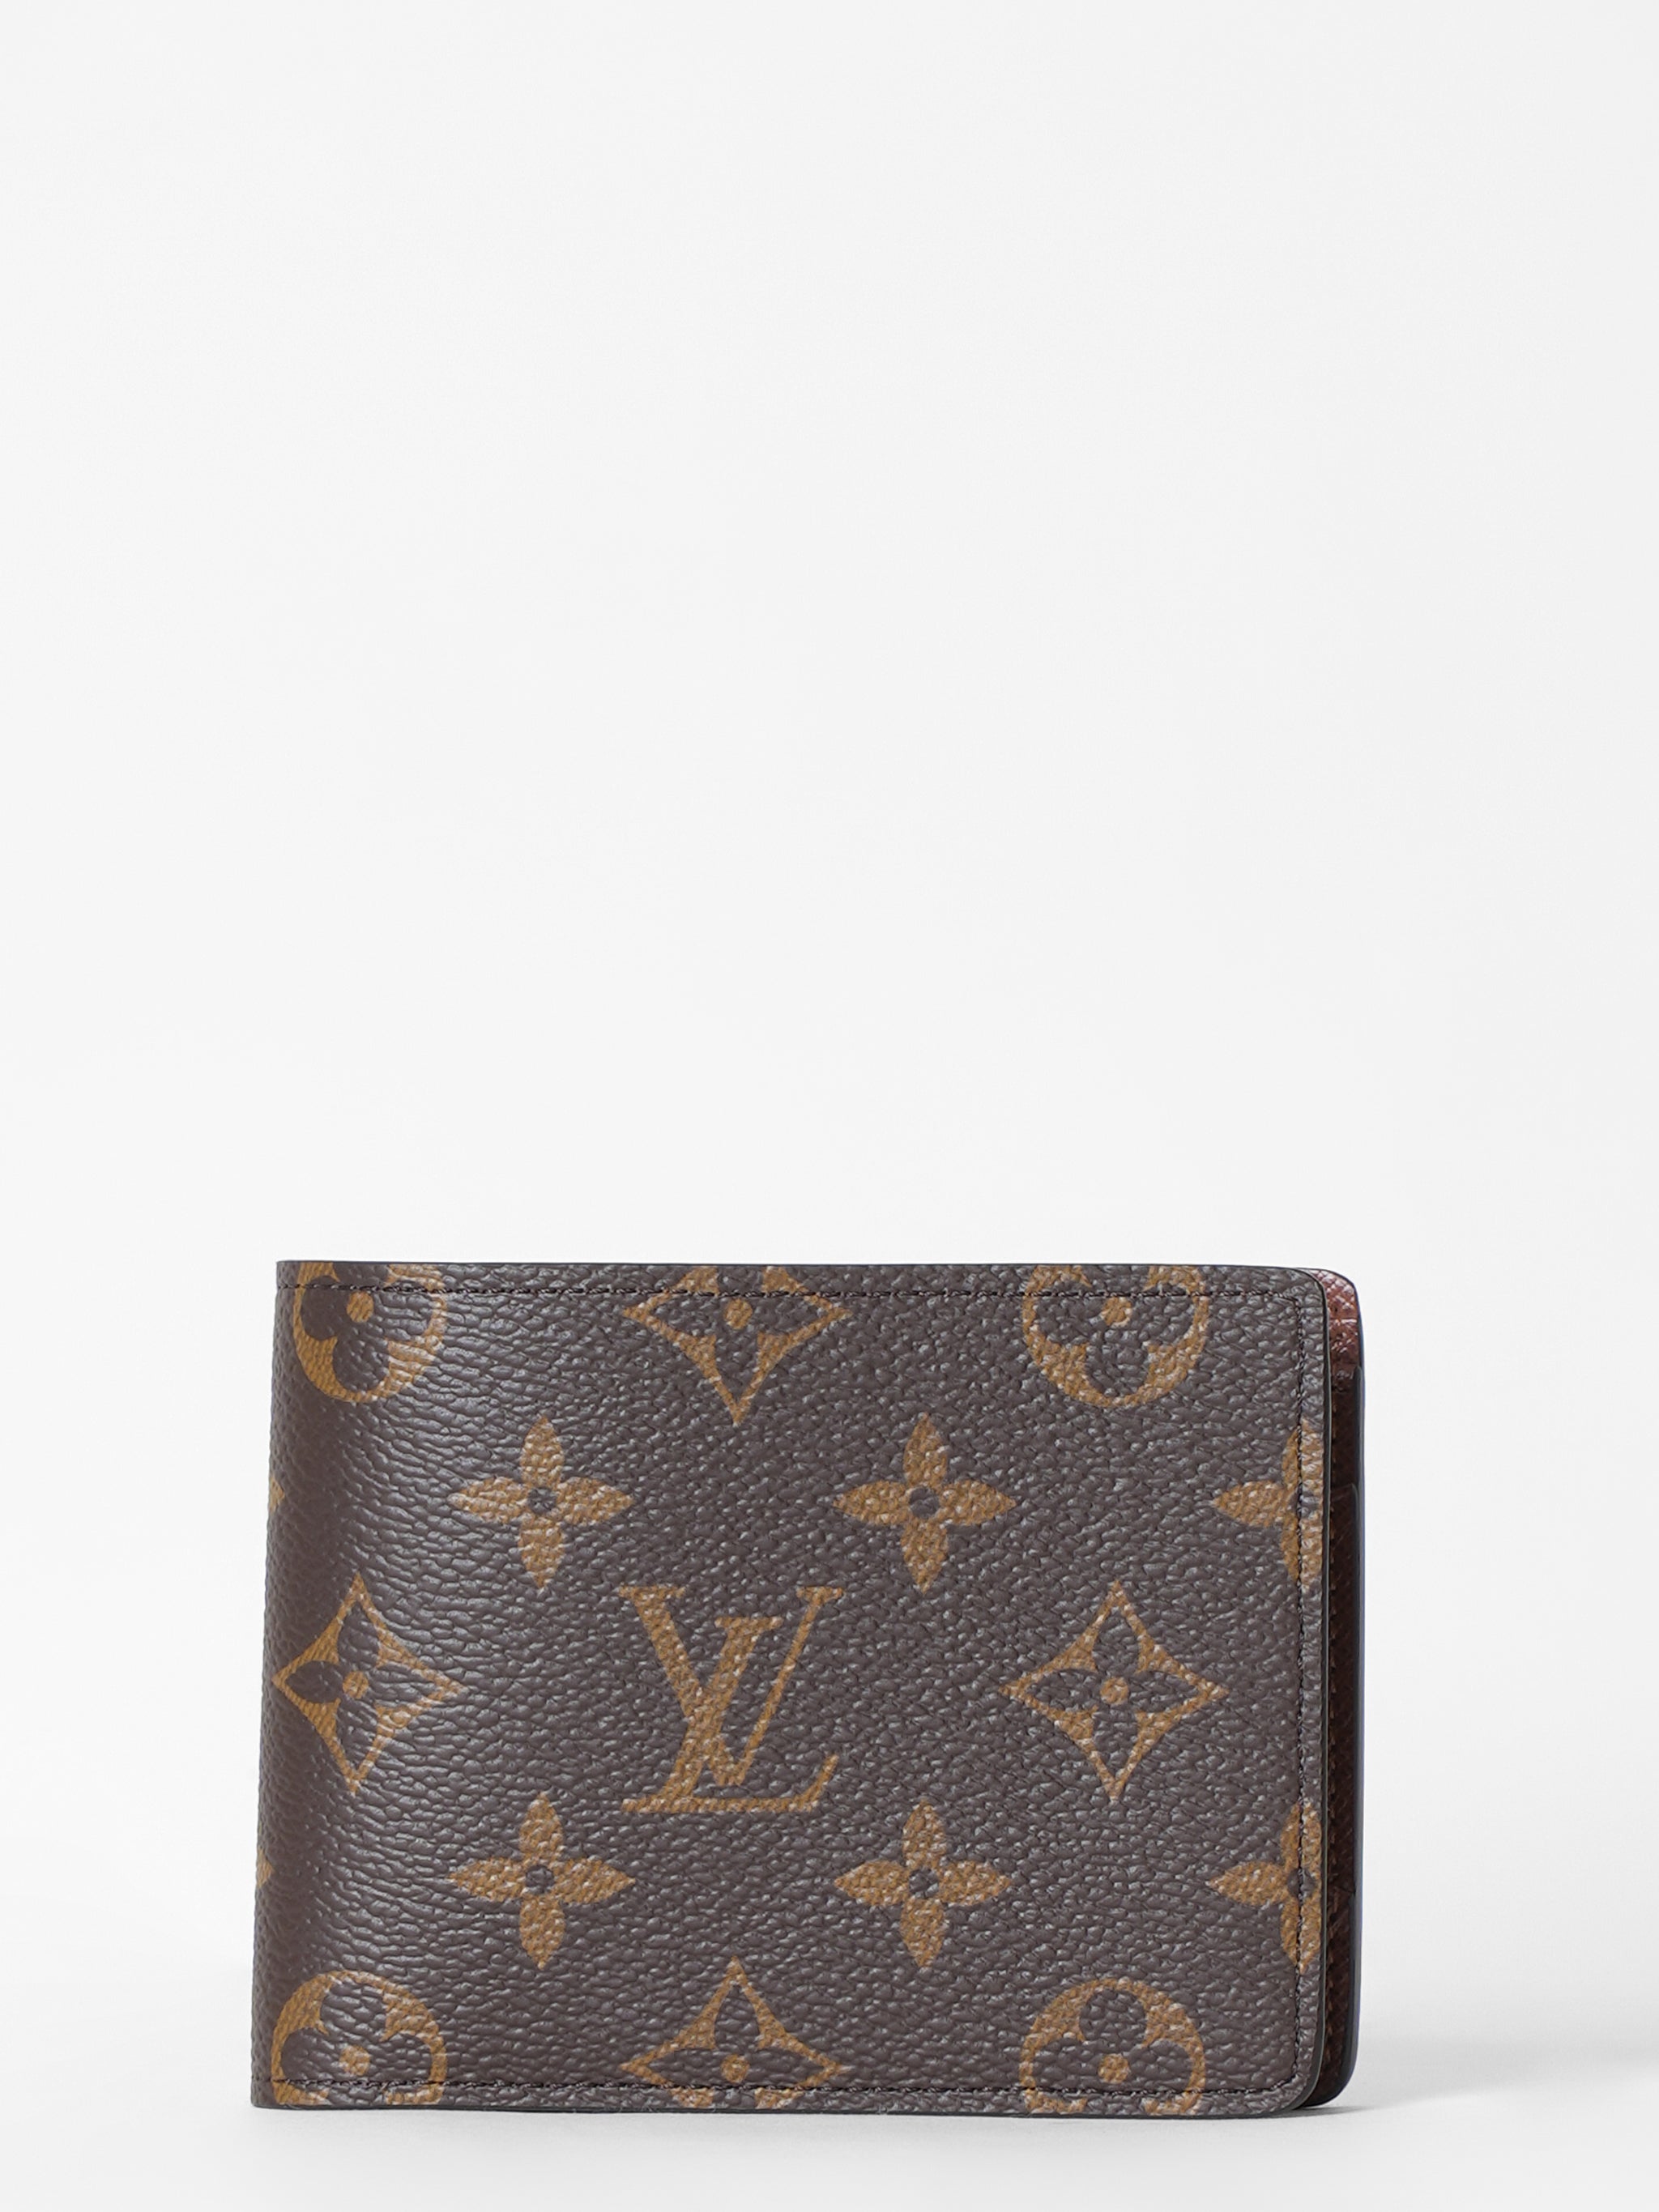 New Louis Vuitton Monogram Slender Wallet